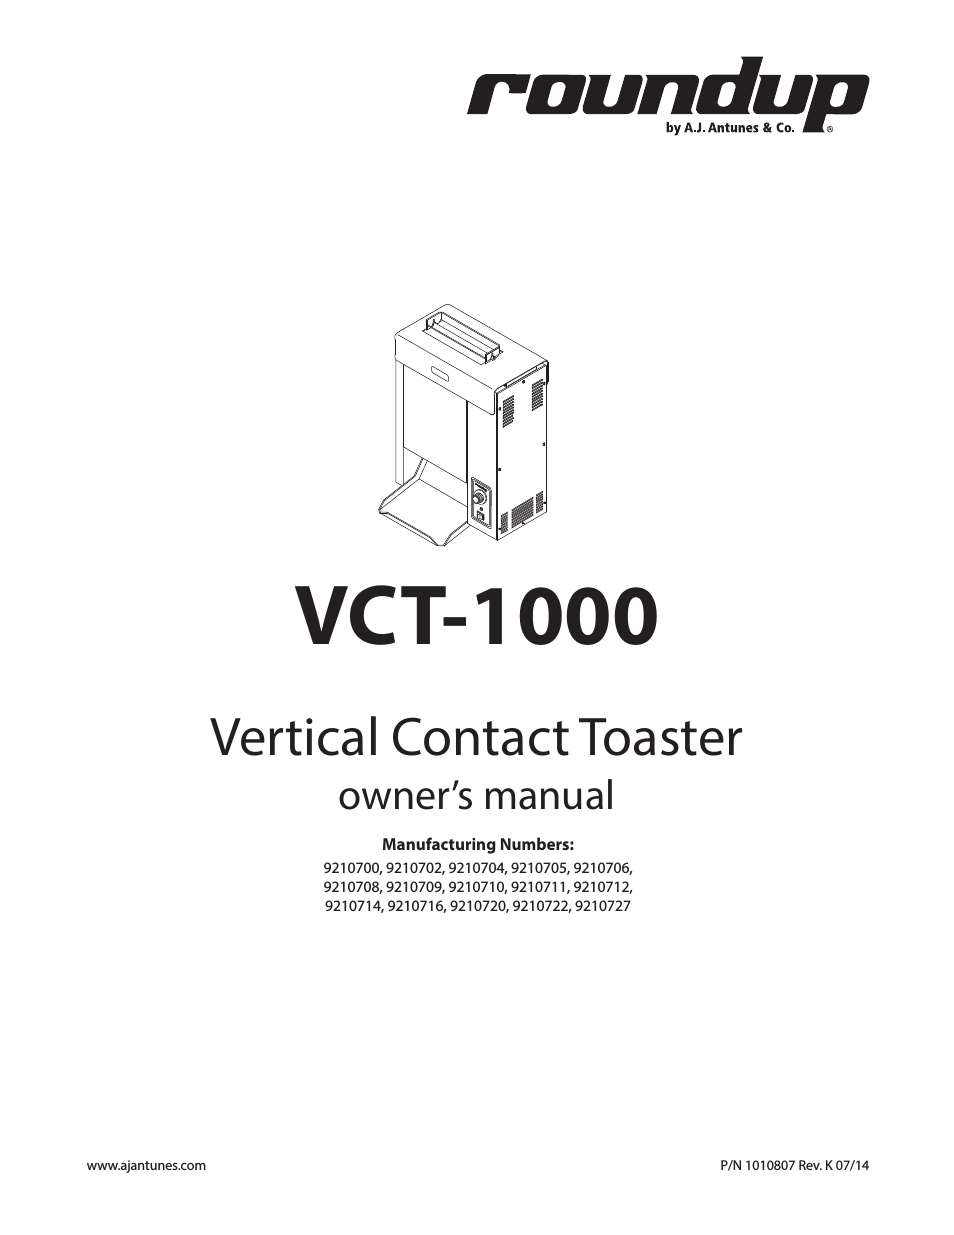 VCT-1000 9210706